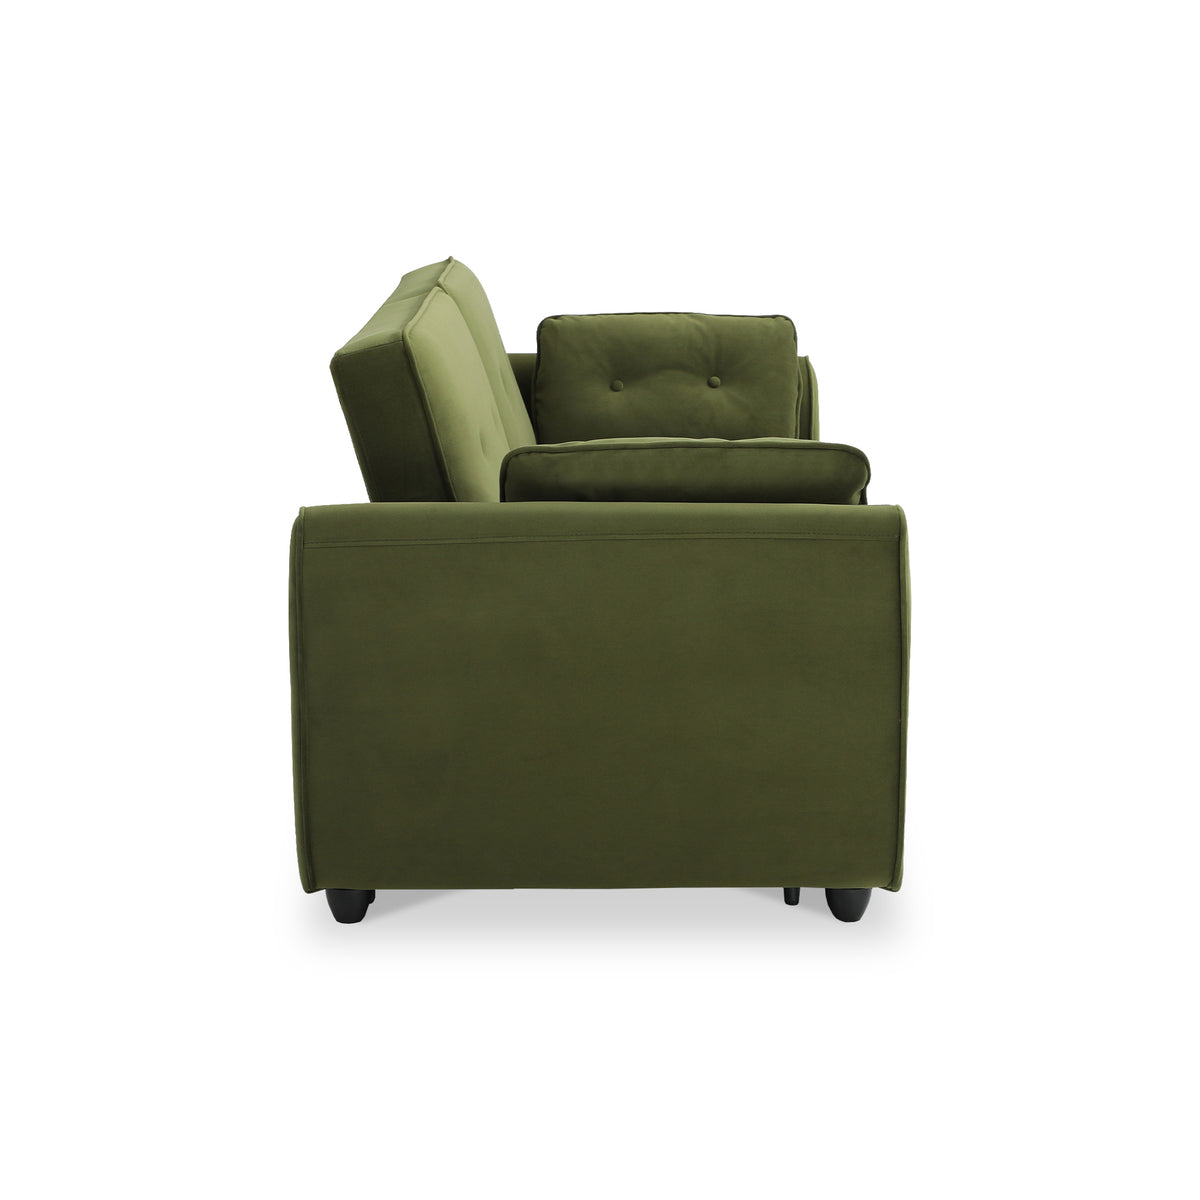 Willette Olive Green Velvet 2 Seater Pop Up Sofa Bed